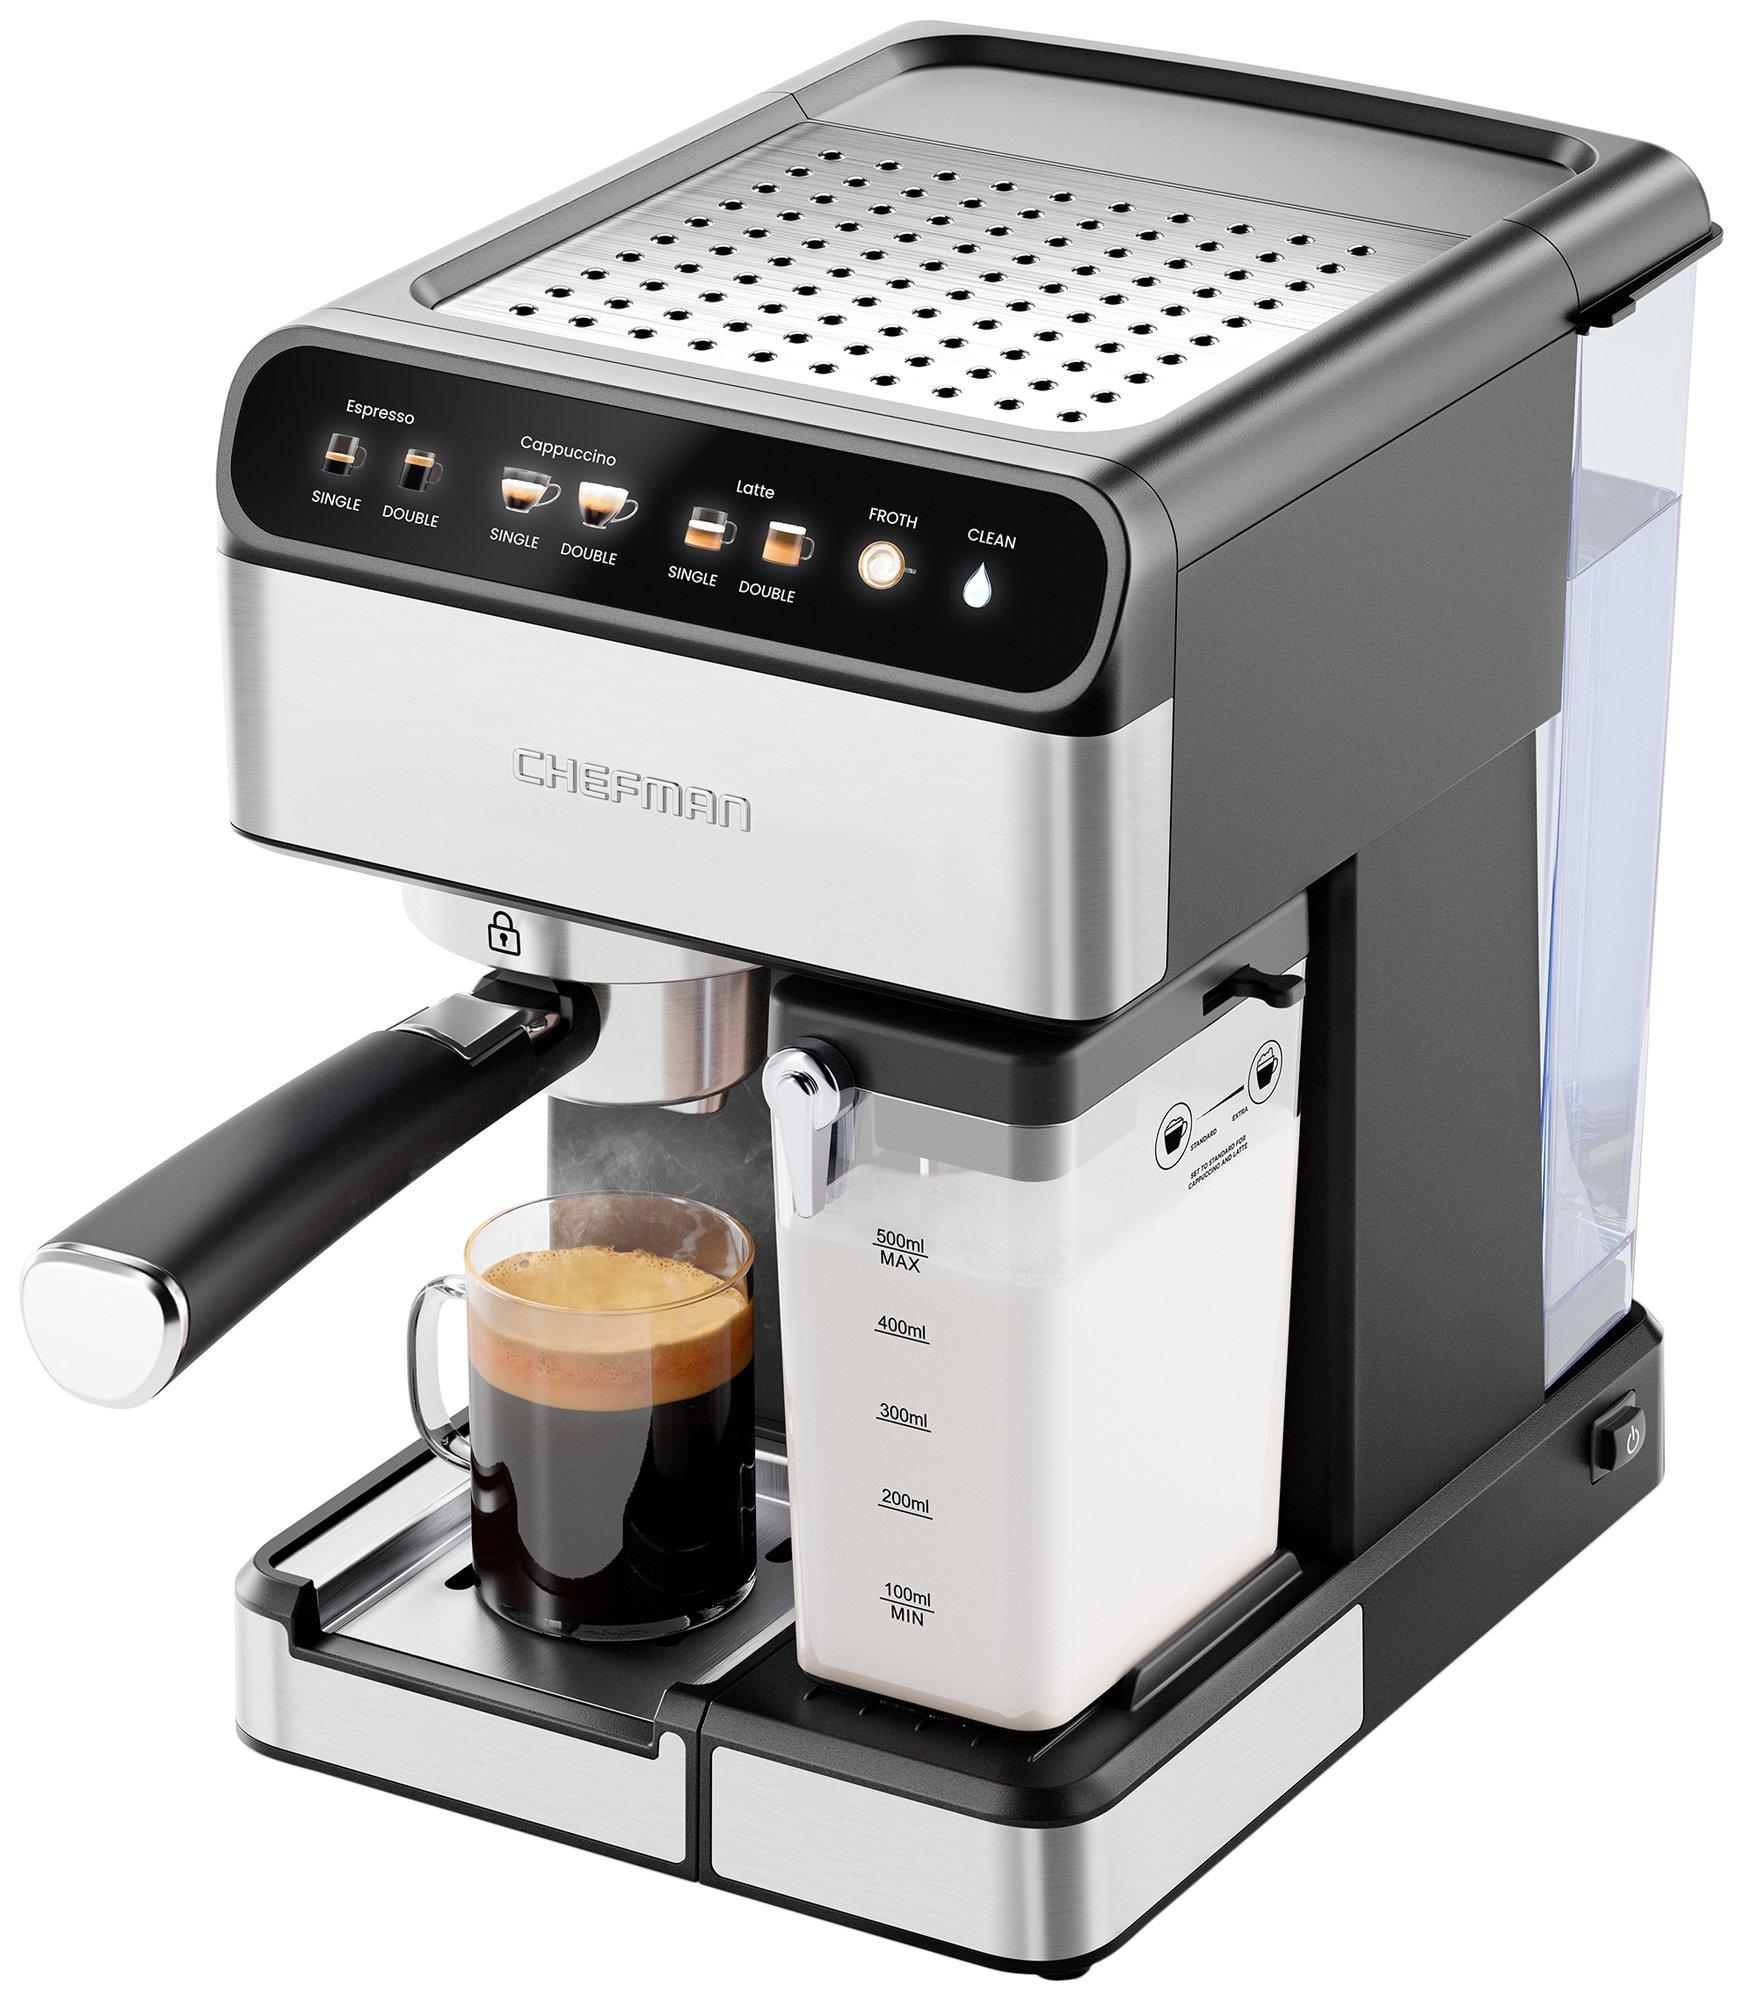 Chefman Digital Espresso Maker